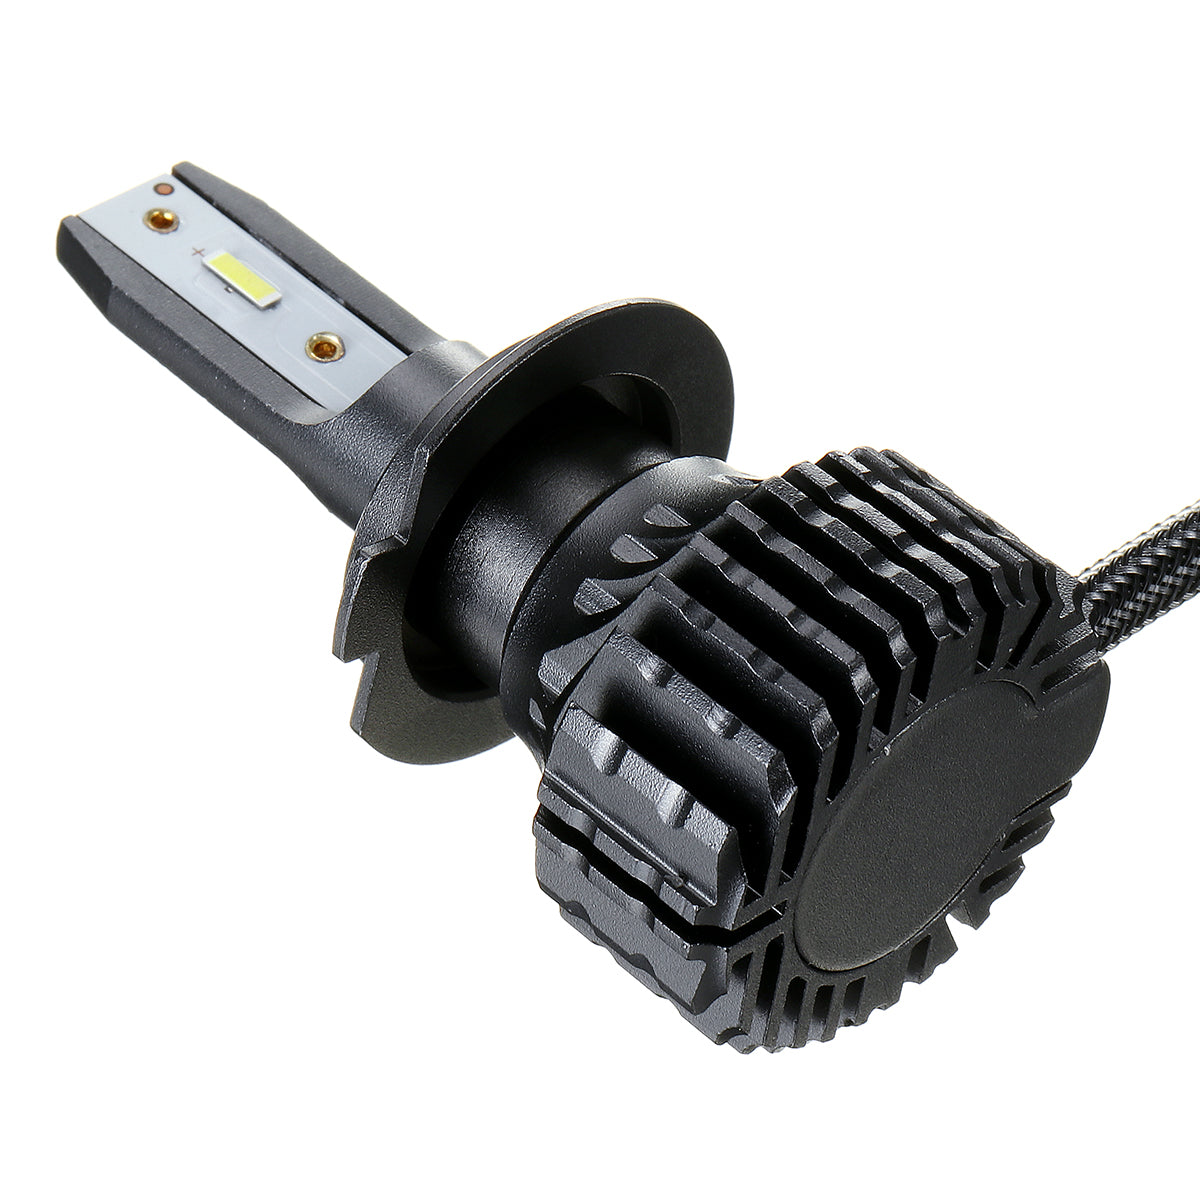 Black F3 Car LED Headlights Bulbs 120 Degree Lighting 6000K 12V 3000LM Waterproof 9005 9006 H1 H11 H7 2Pcs